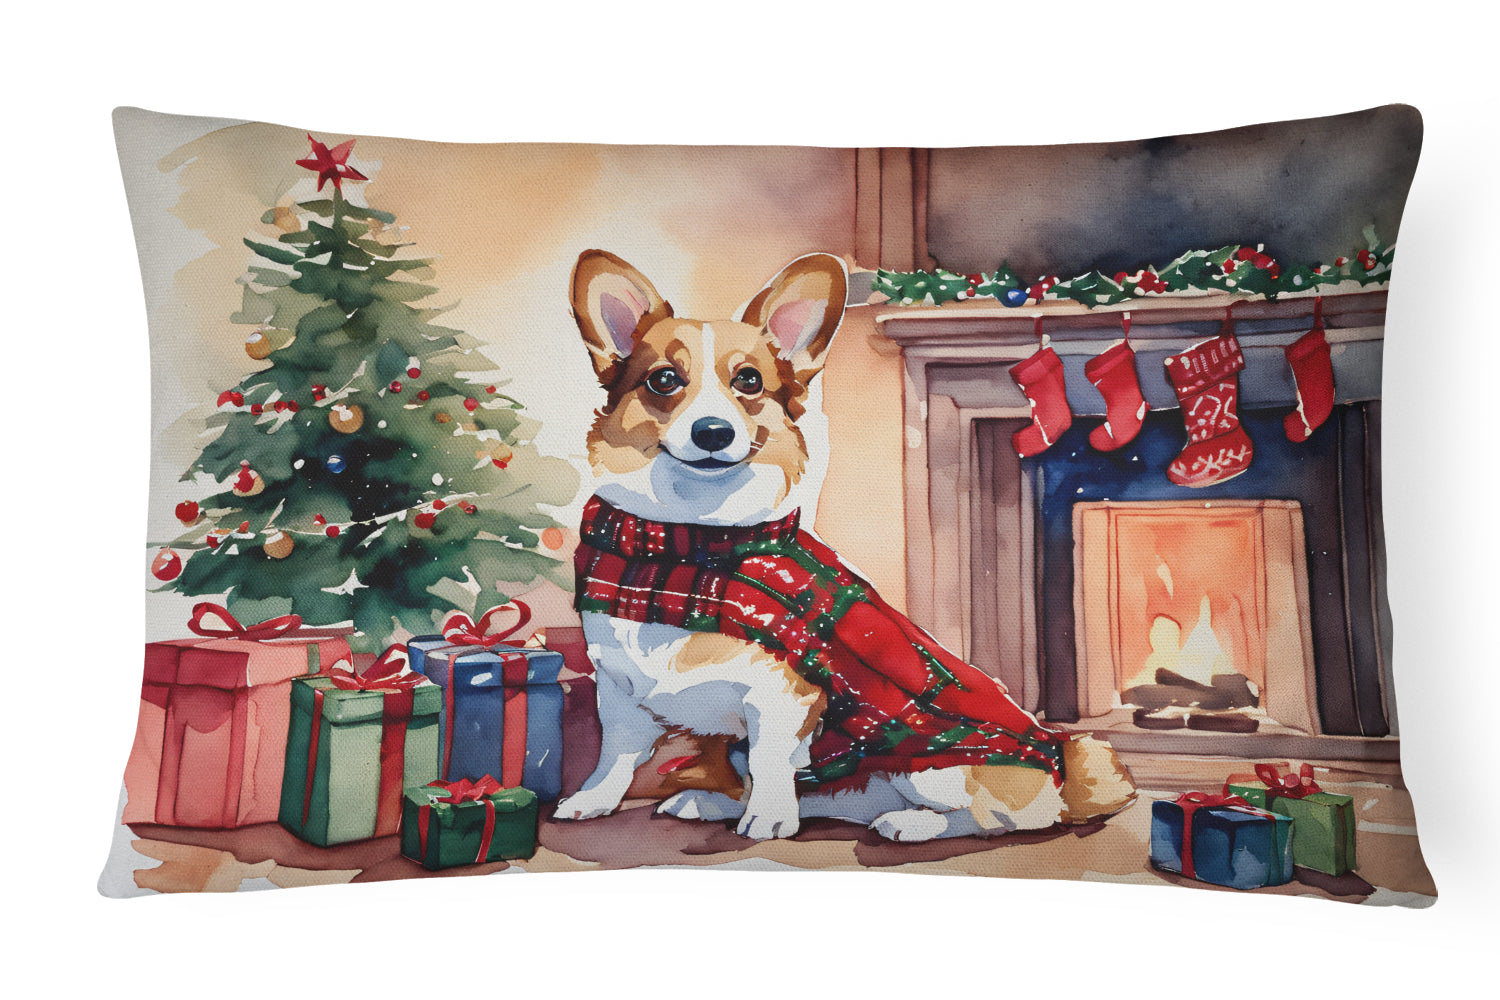 Buy this Corgi Cozy Christmas Throw Pillow